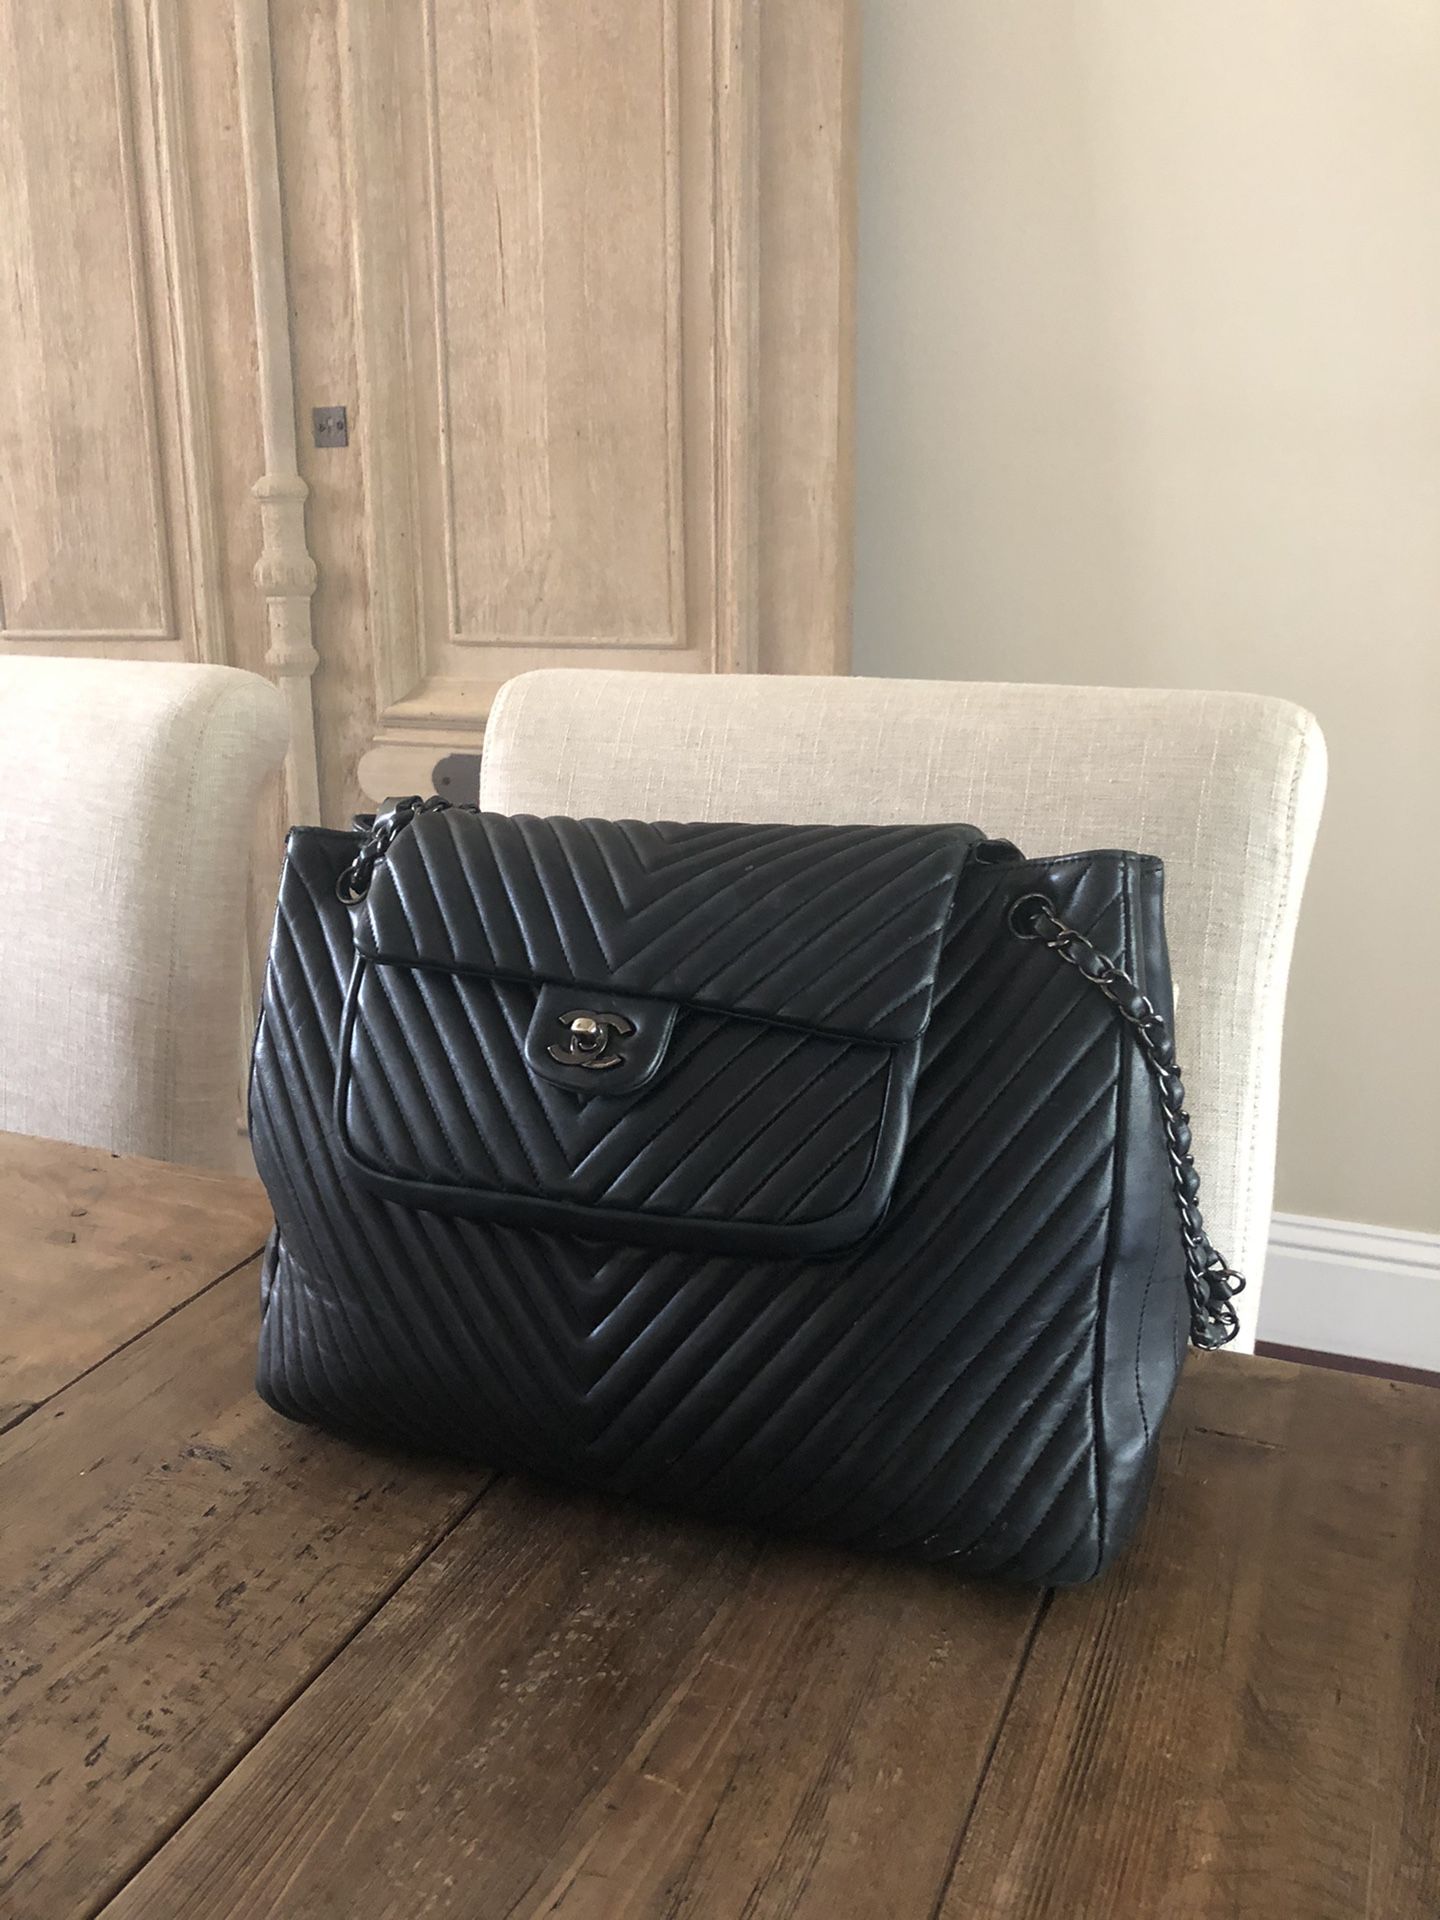 Chanel XL leather handbag cash + trades!